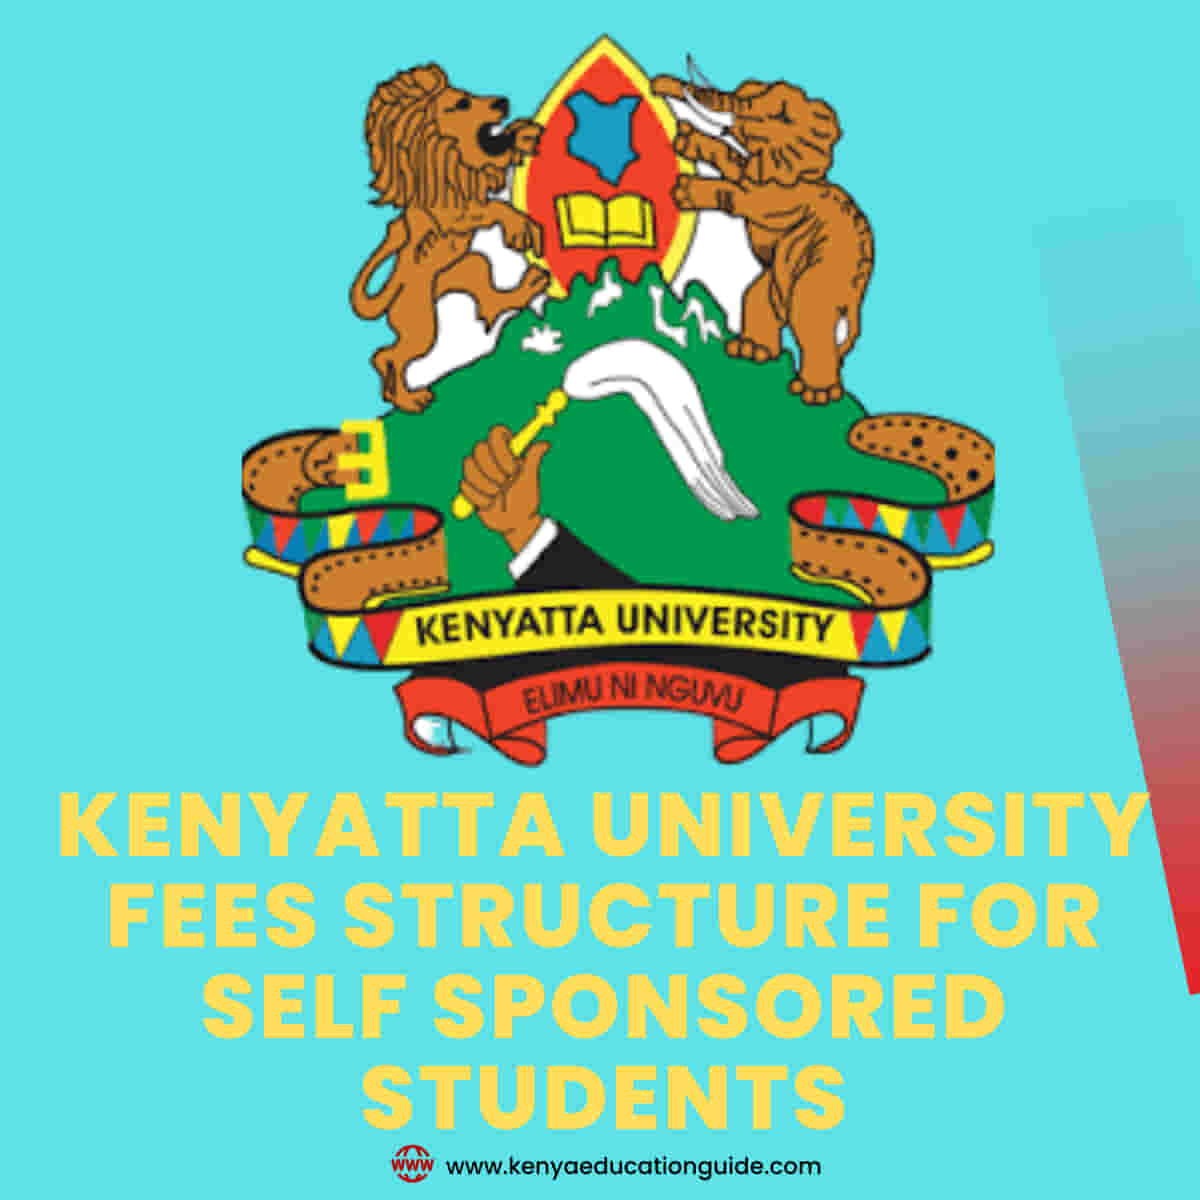 Kenyatta university fees structure for self sponsored students